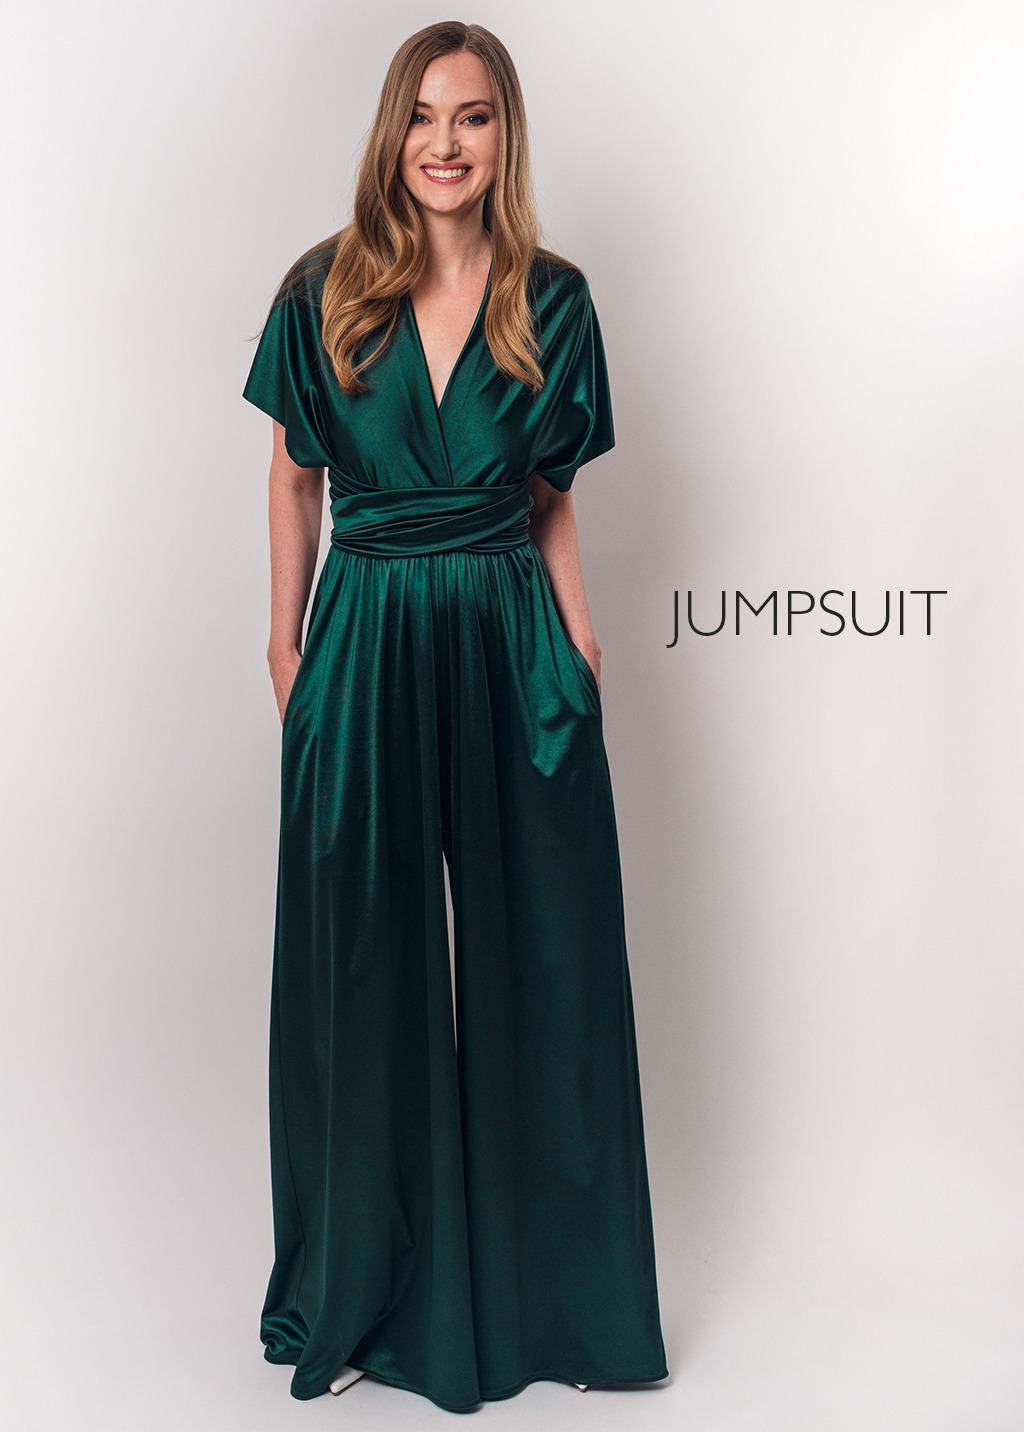 Dark green luxury satin infinity dress or jumpsuit